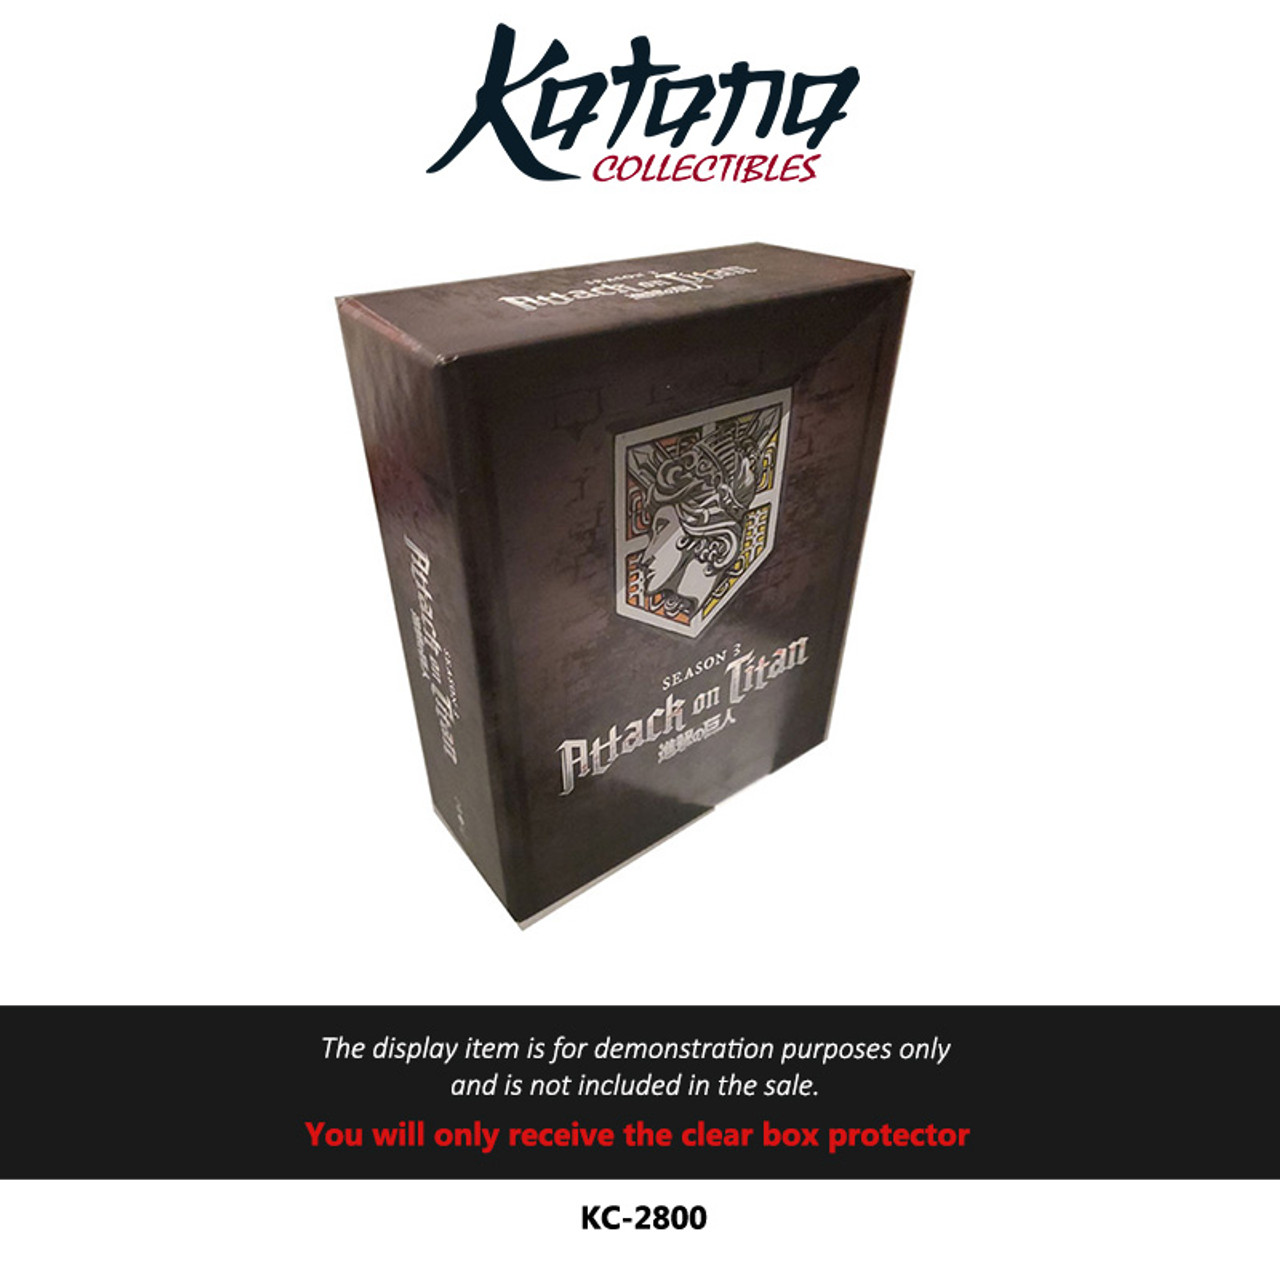 Katana Collectibles Protector For Attack On Titan Season 3 Limited Edition Boxset